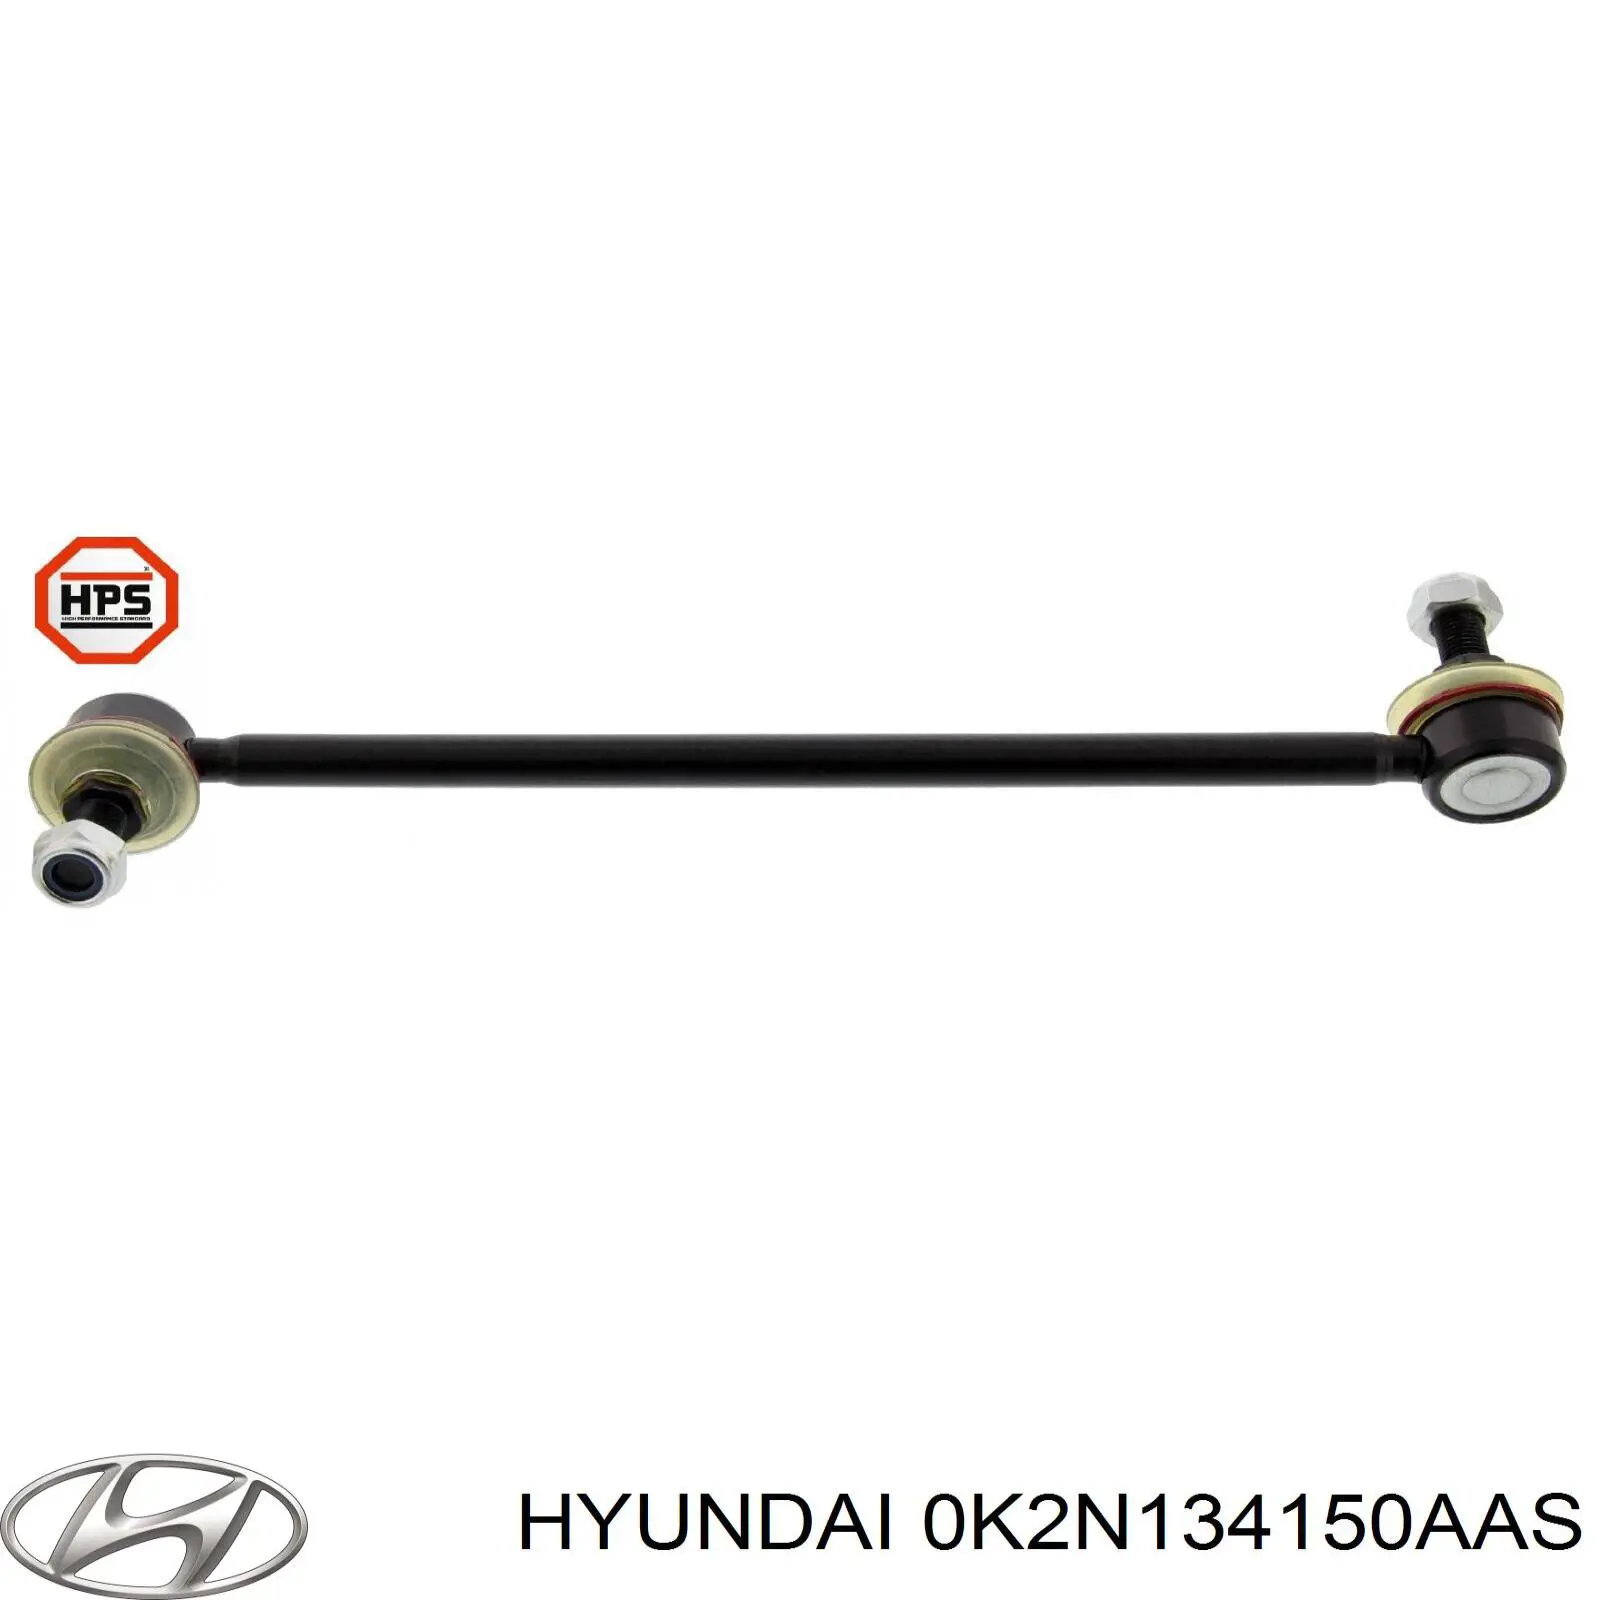 0K2N134150AAS Hyundai/Kia barra estabilizadora delantera derecha